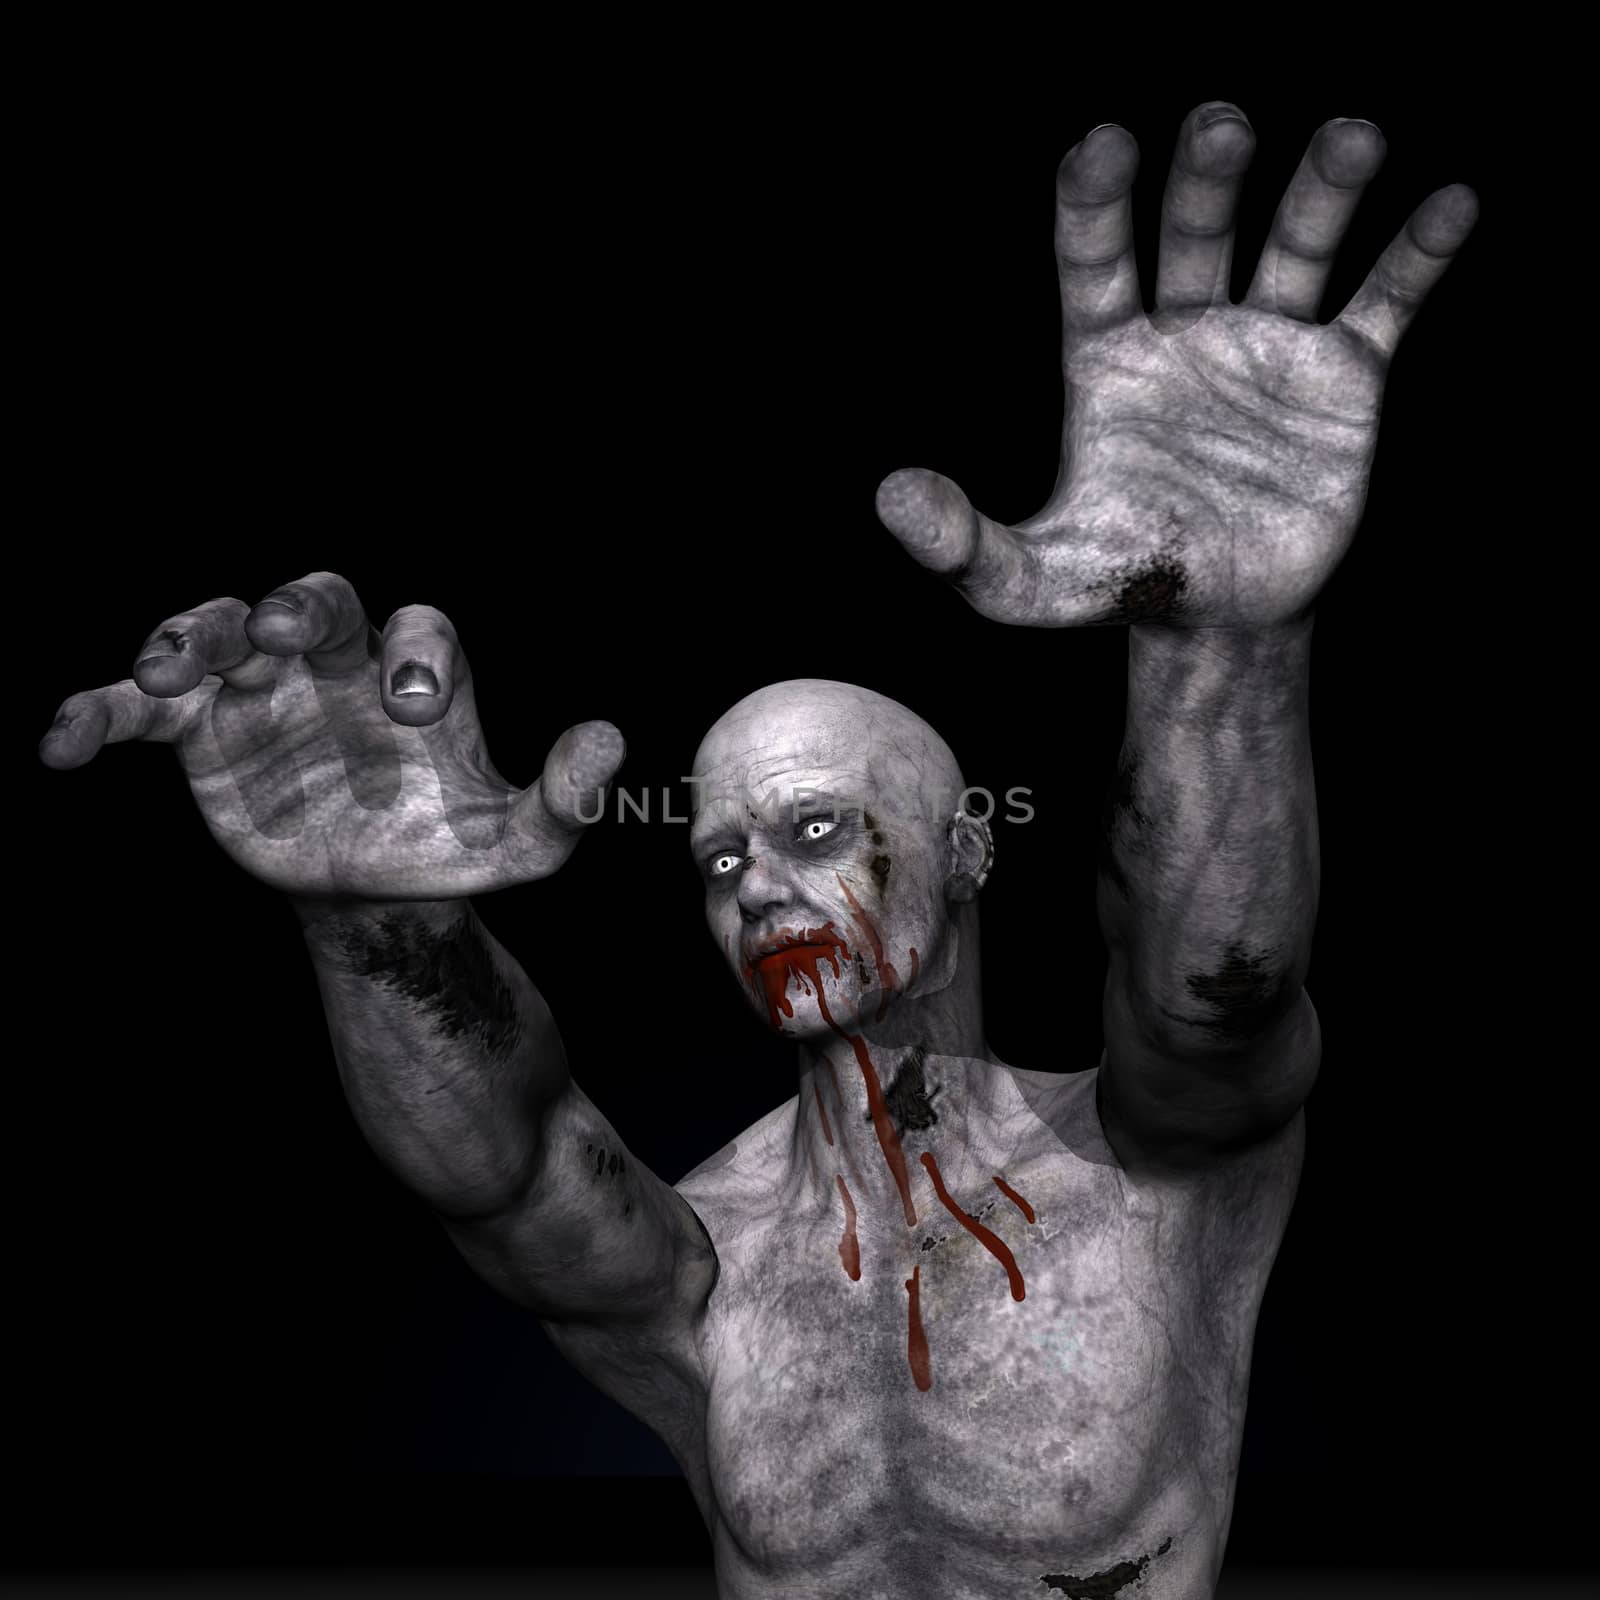 Zombie for Halloween - 3D render by Elenaphotos21